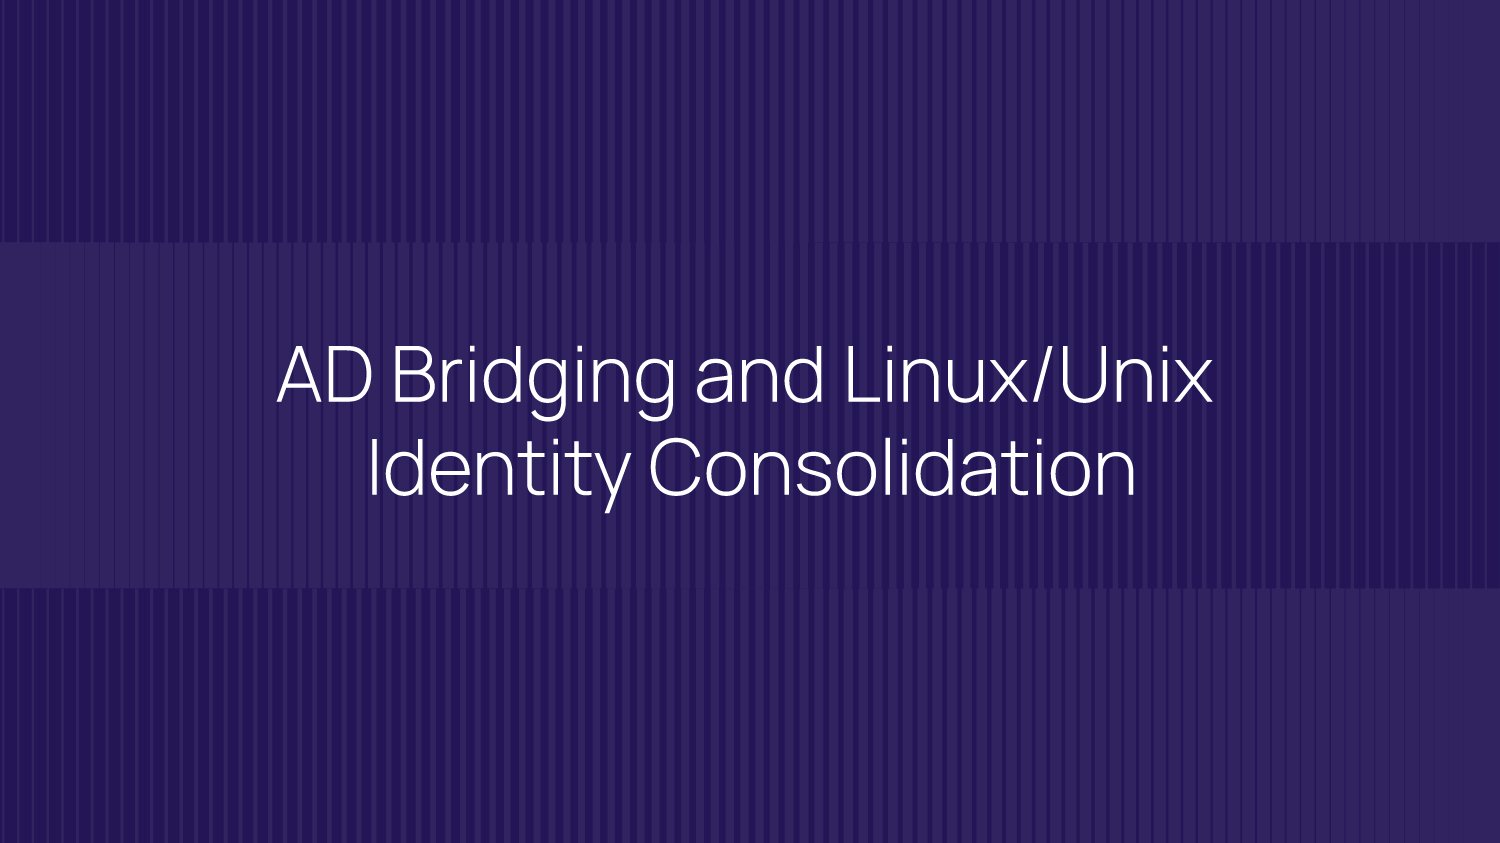 delinea-image-ad-bridging-linux-unix-identity-consolidation-thumbnail